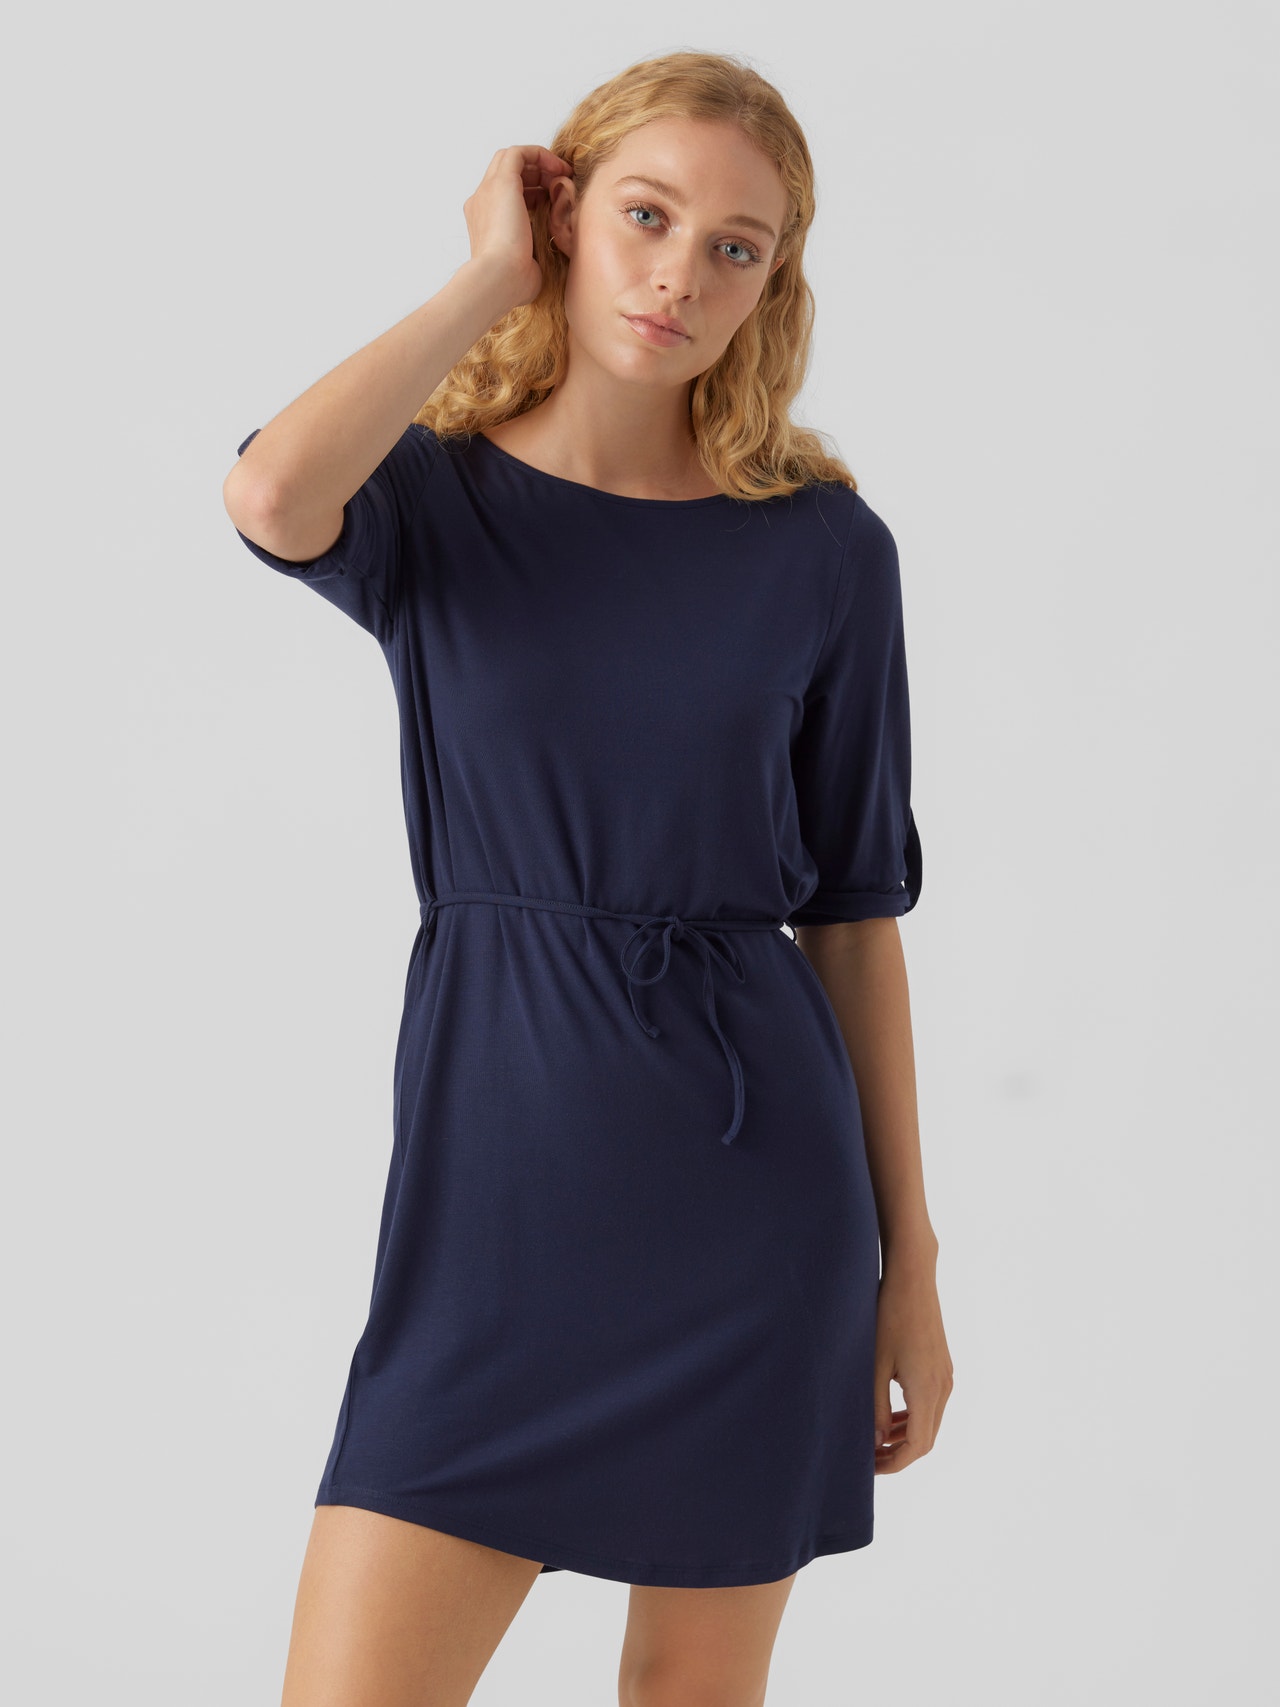 VMAVA Short dress with 50% Vero discount! | Moda®